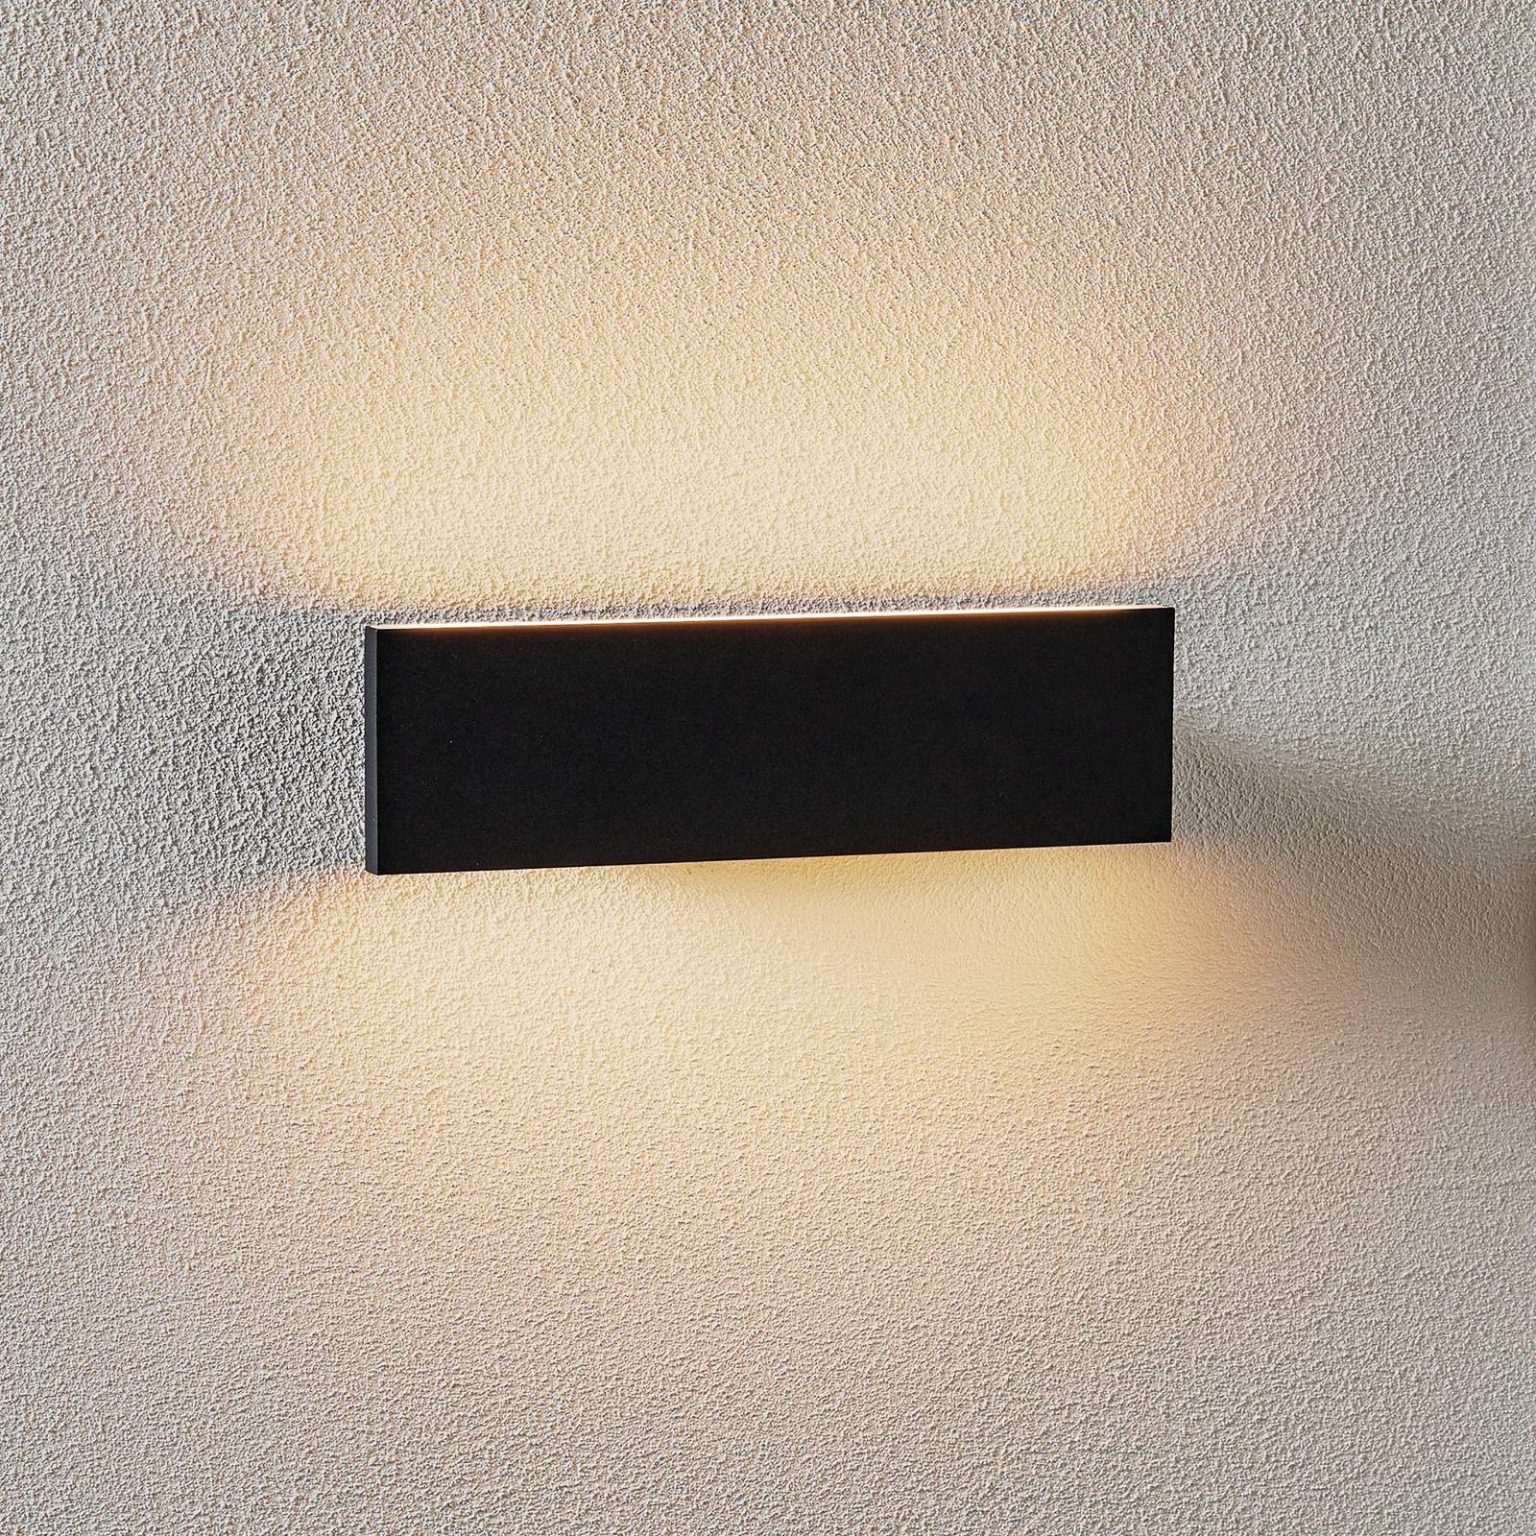 Kinkiet LED Concha 28 cm, antracyt